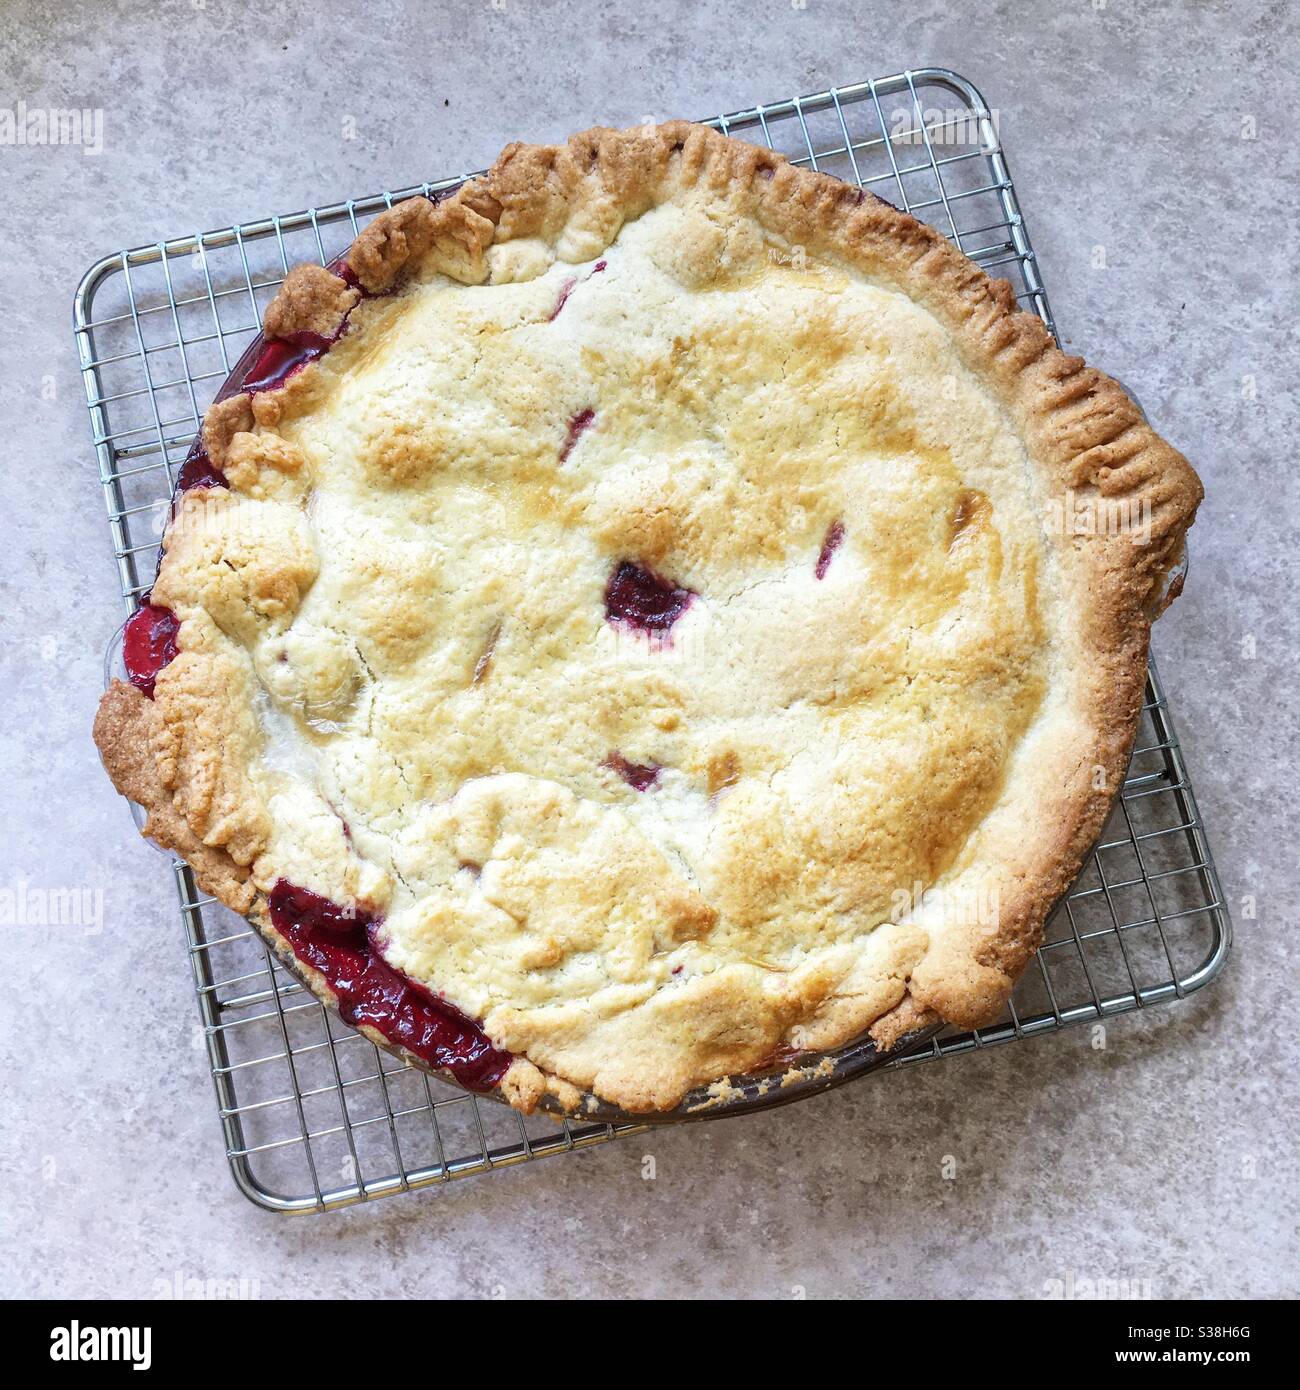 Homemade blackberry and apple pie Stock Photo